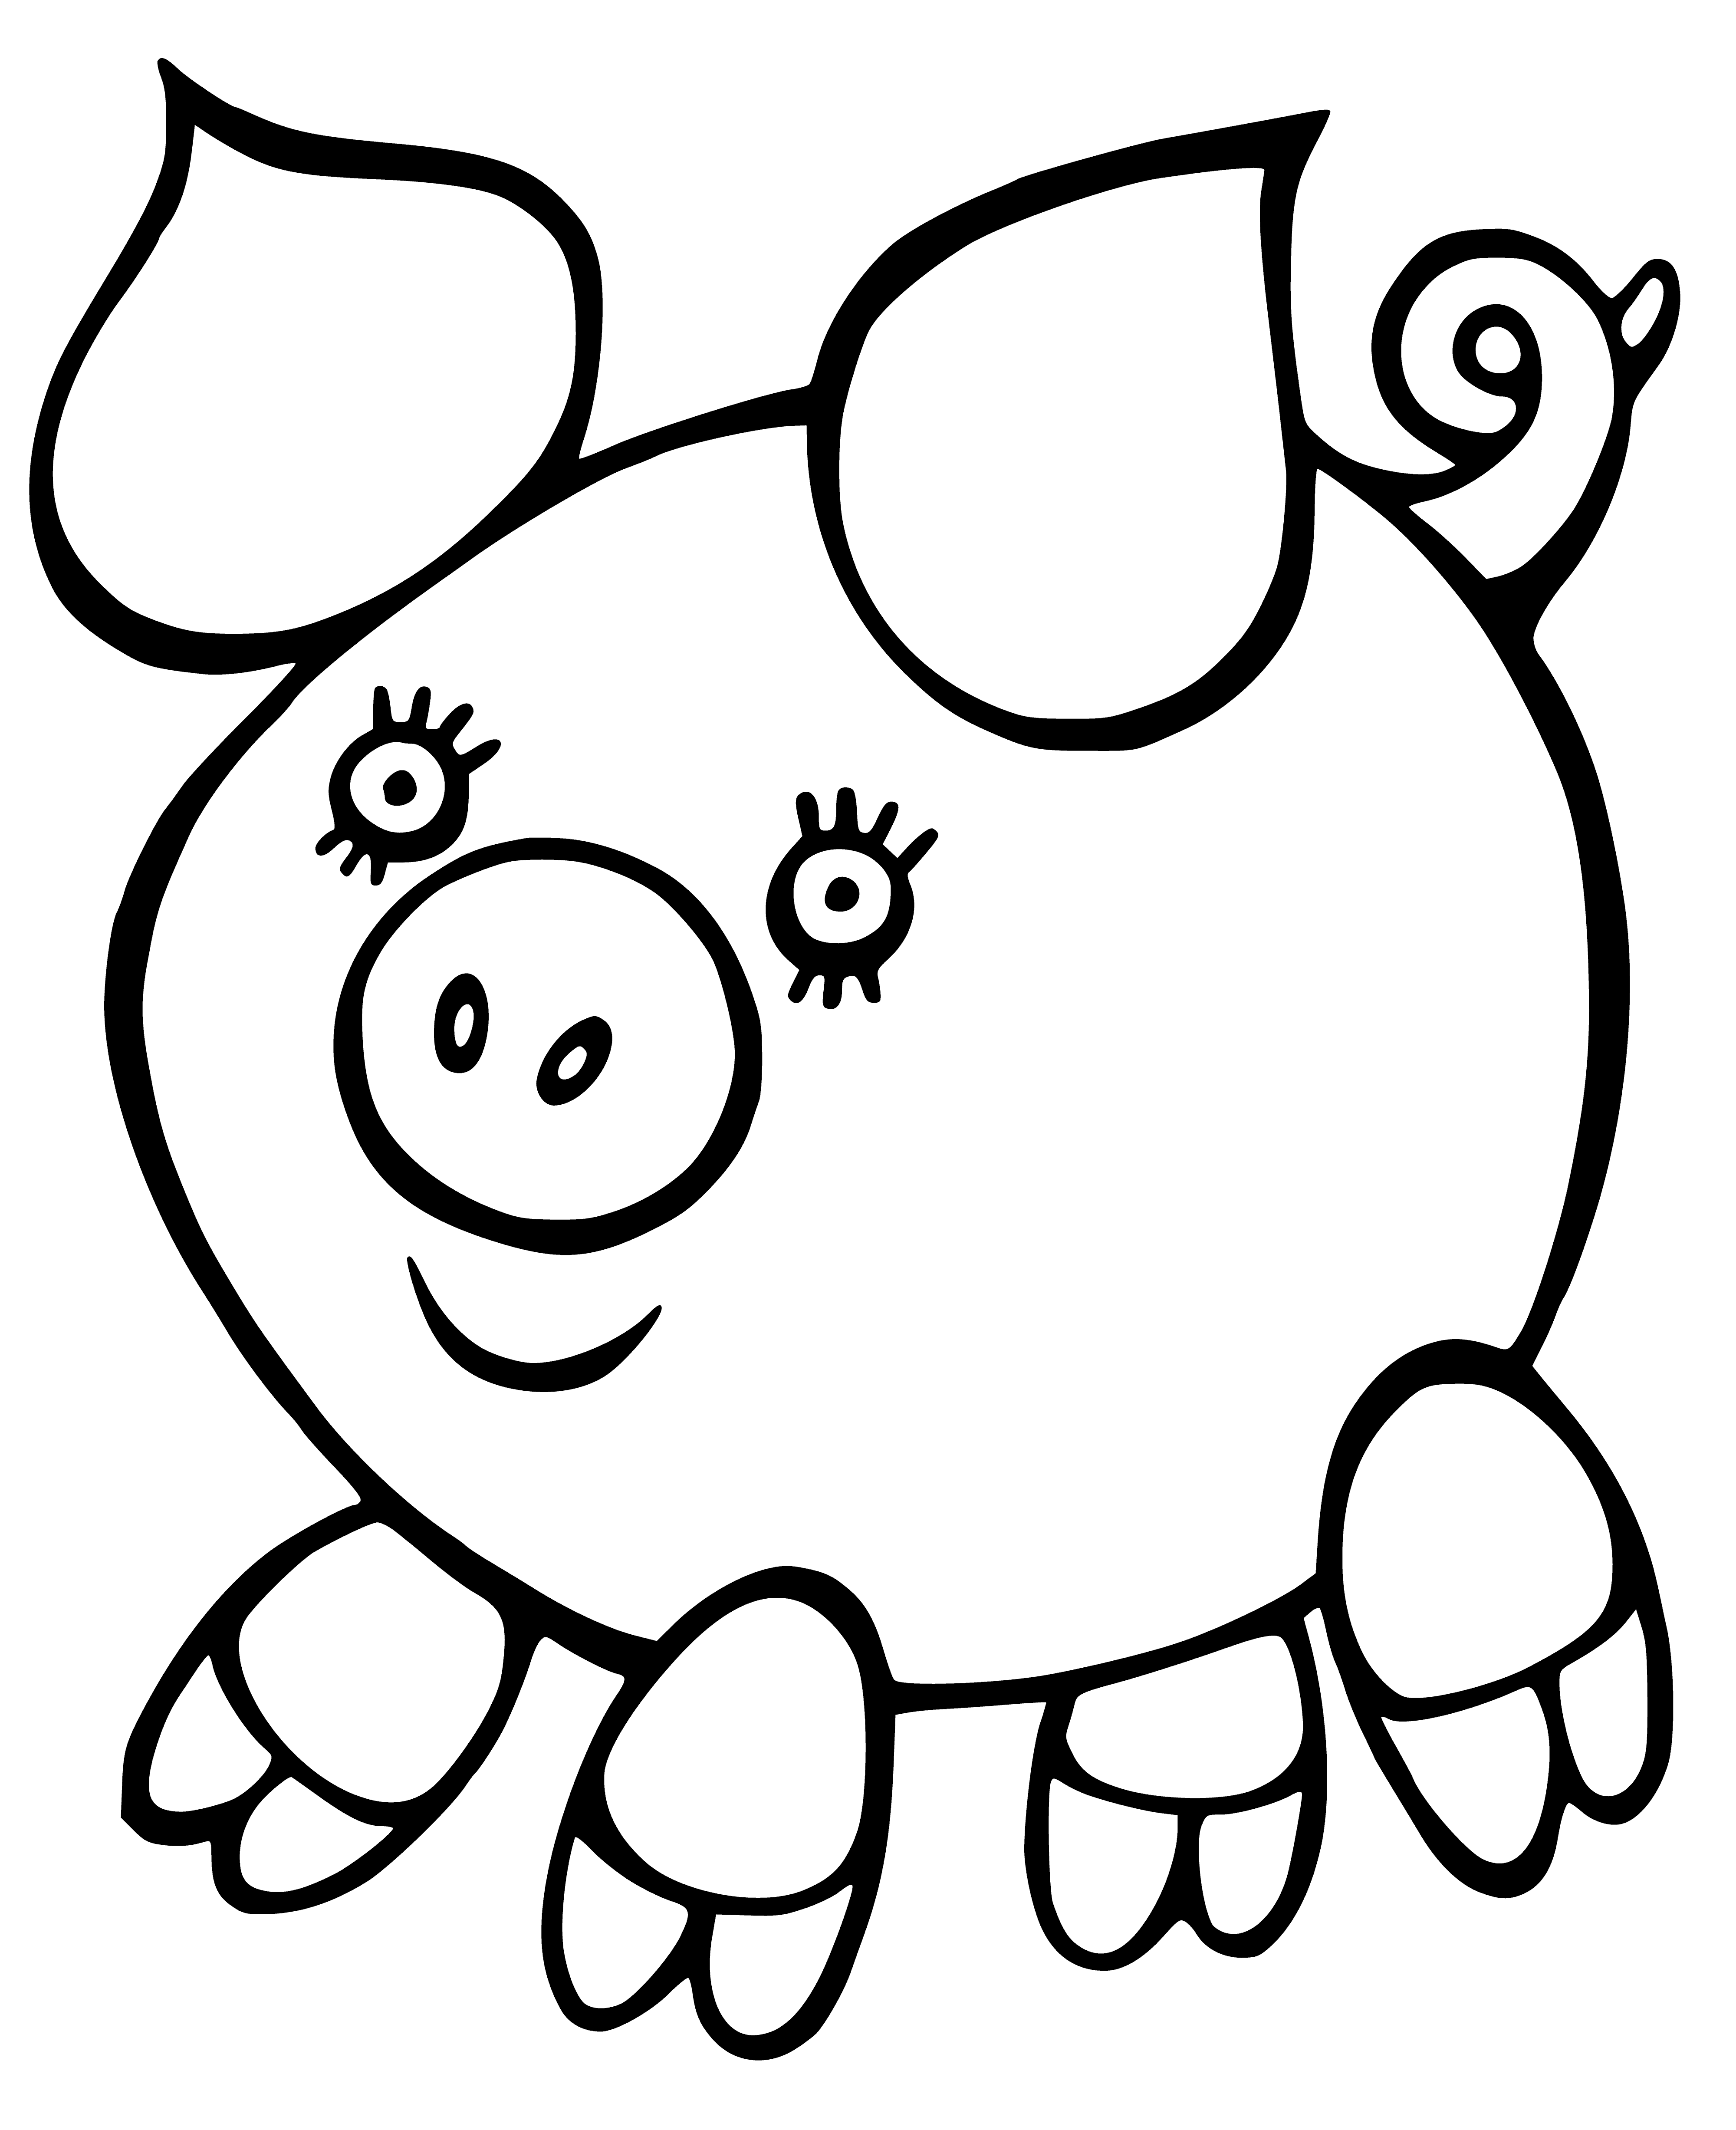 Piggy coloring page